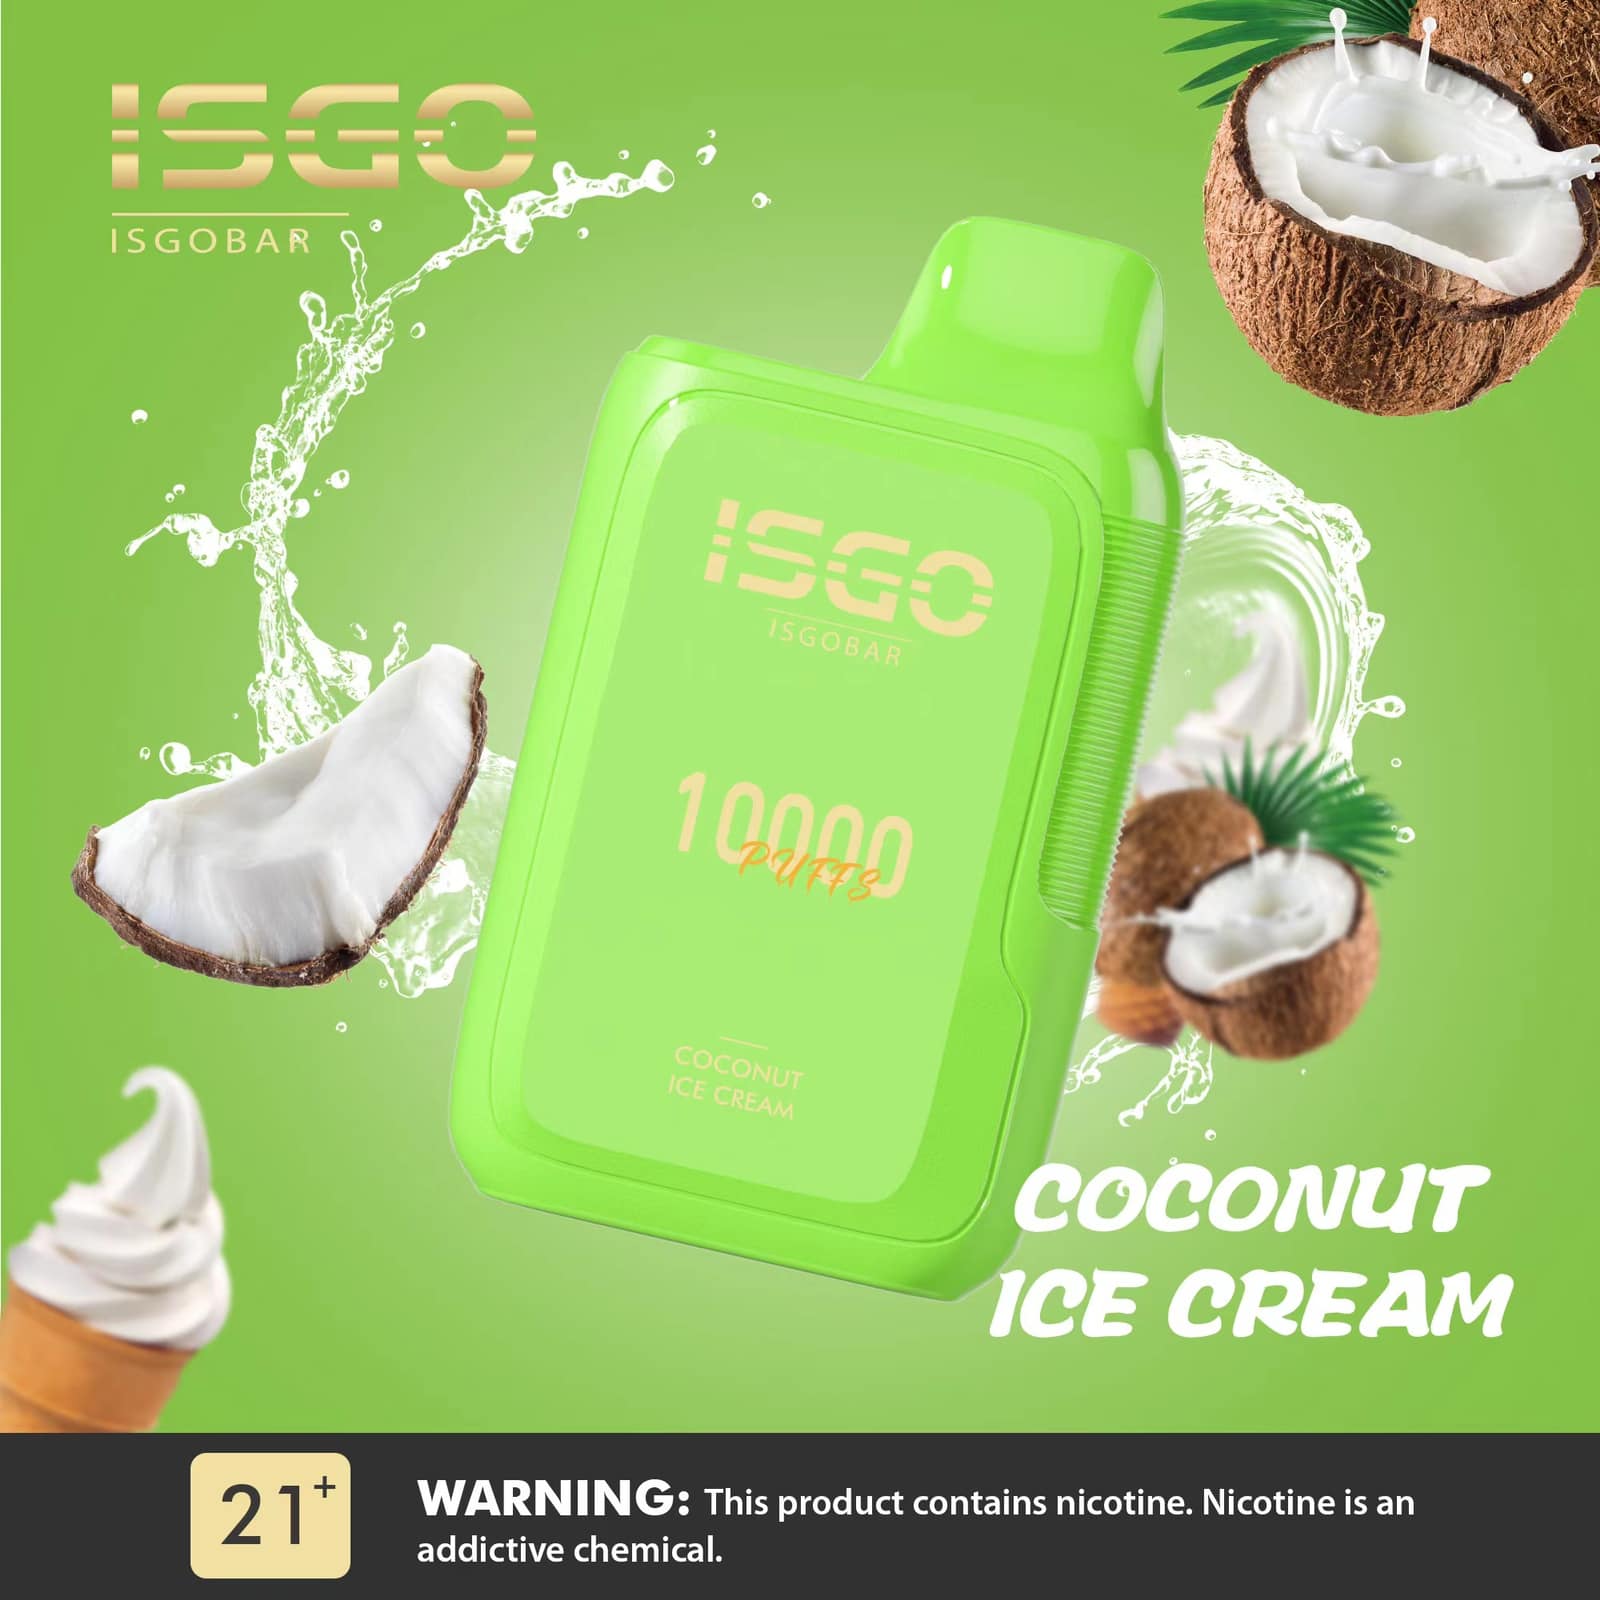 ISGO BAR 10000 - COCONUT ICE CREAM